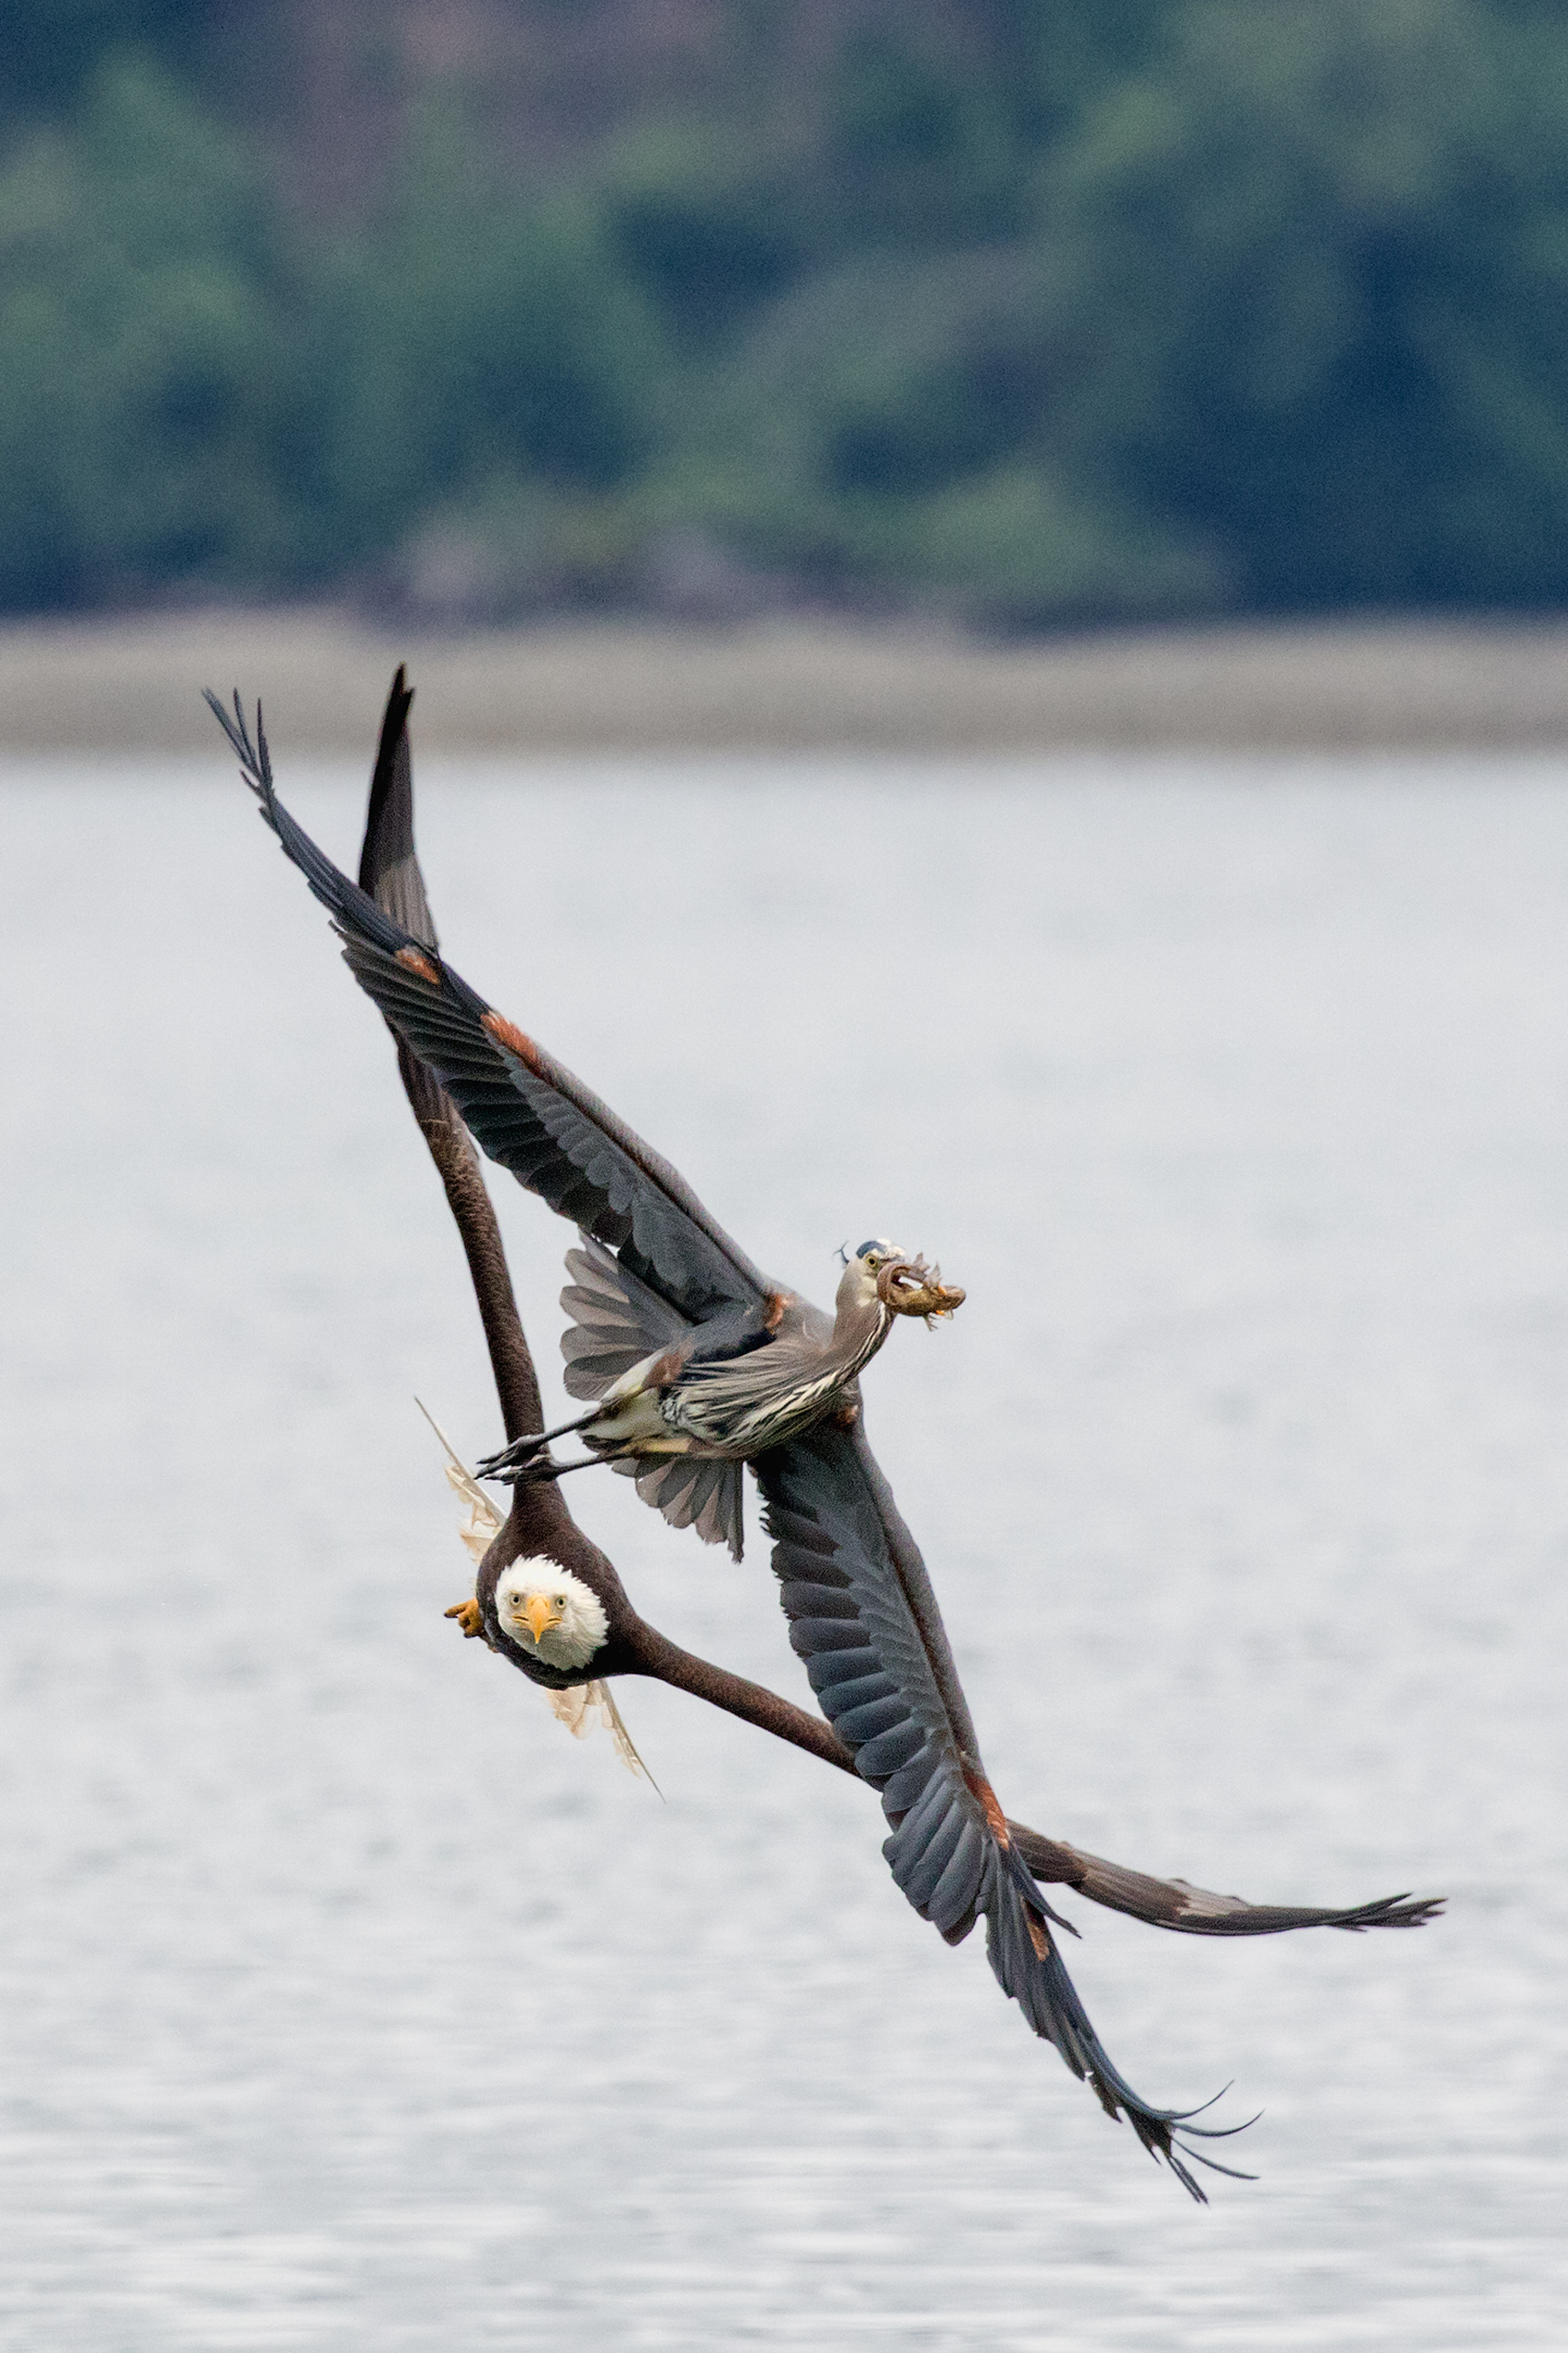 Bald eagle chasing great blue heron, Hood Canal, Washington, 2015.